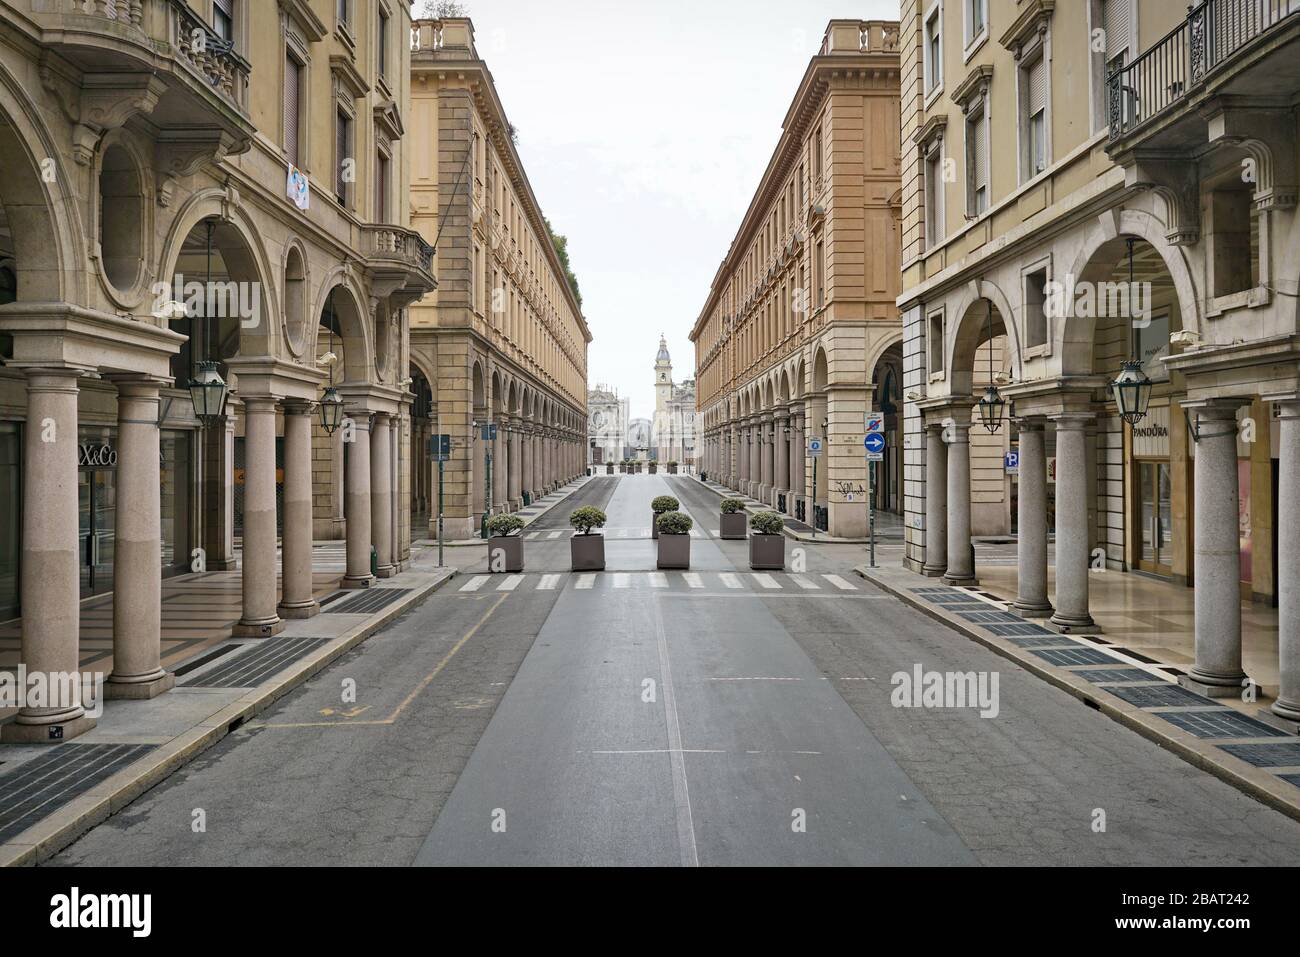 Coronavirus impact, empty downtown street Turin, Italy - March 2020 Stock Photo